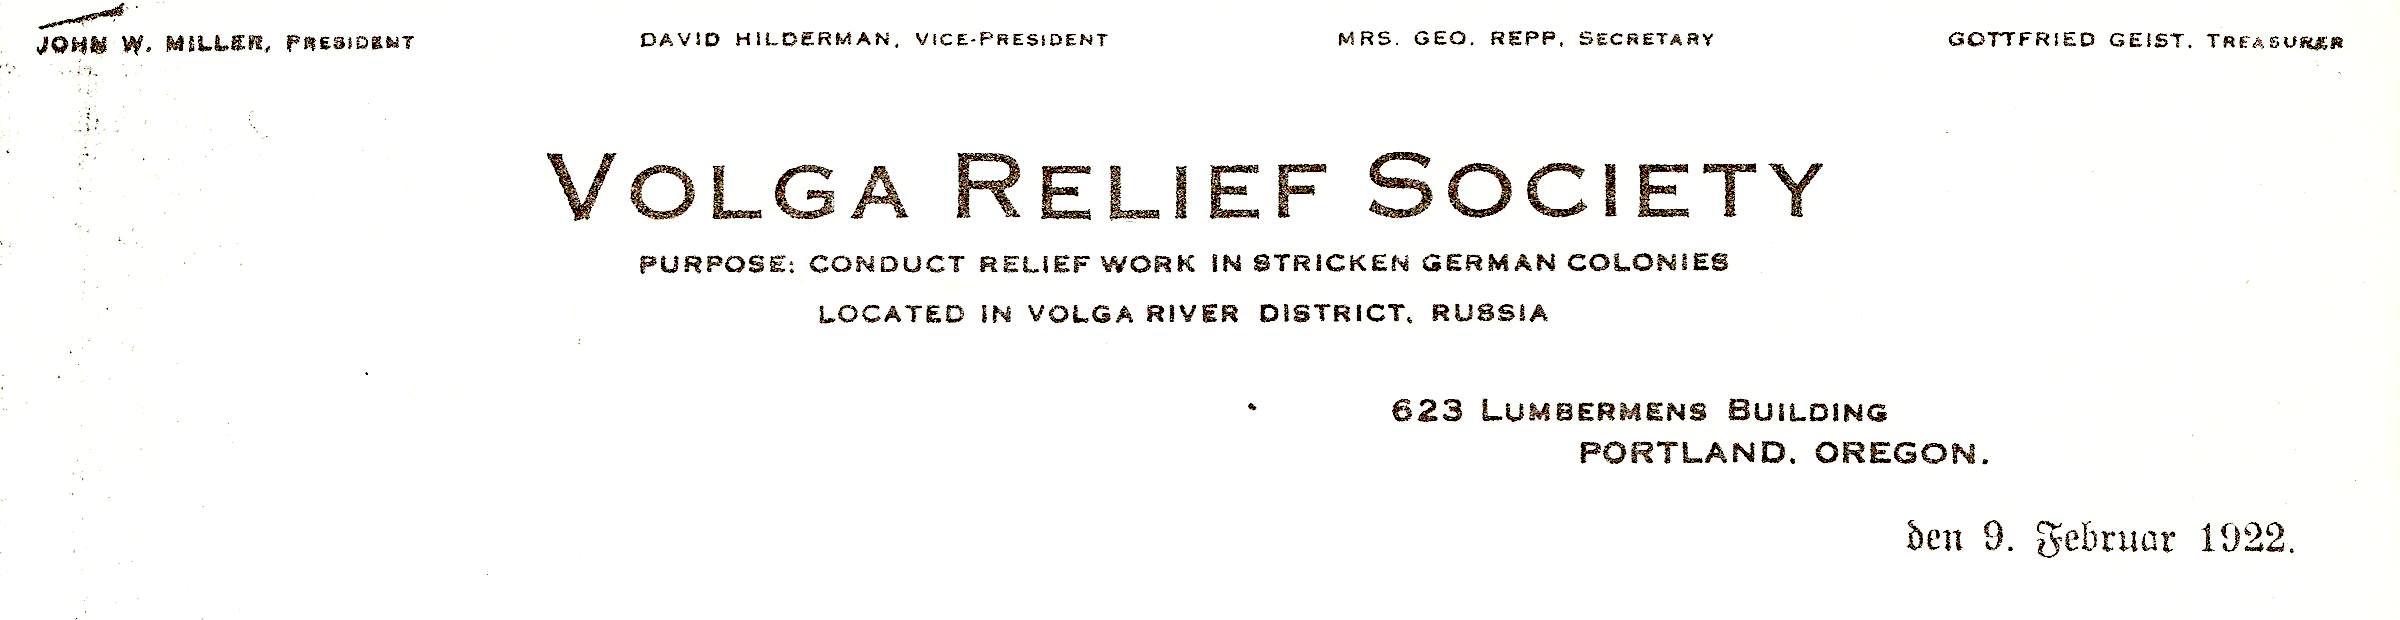 Letterhead for the Volga Relief Society